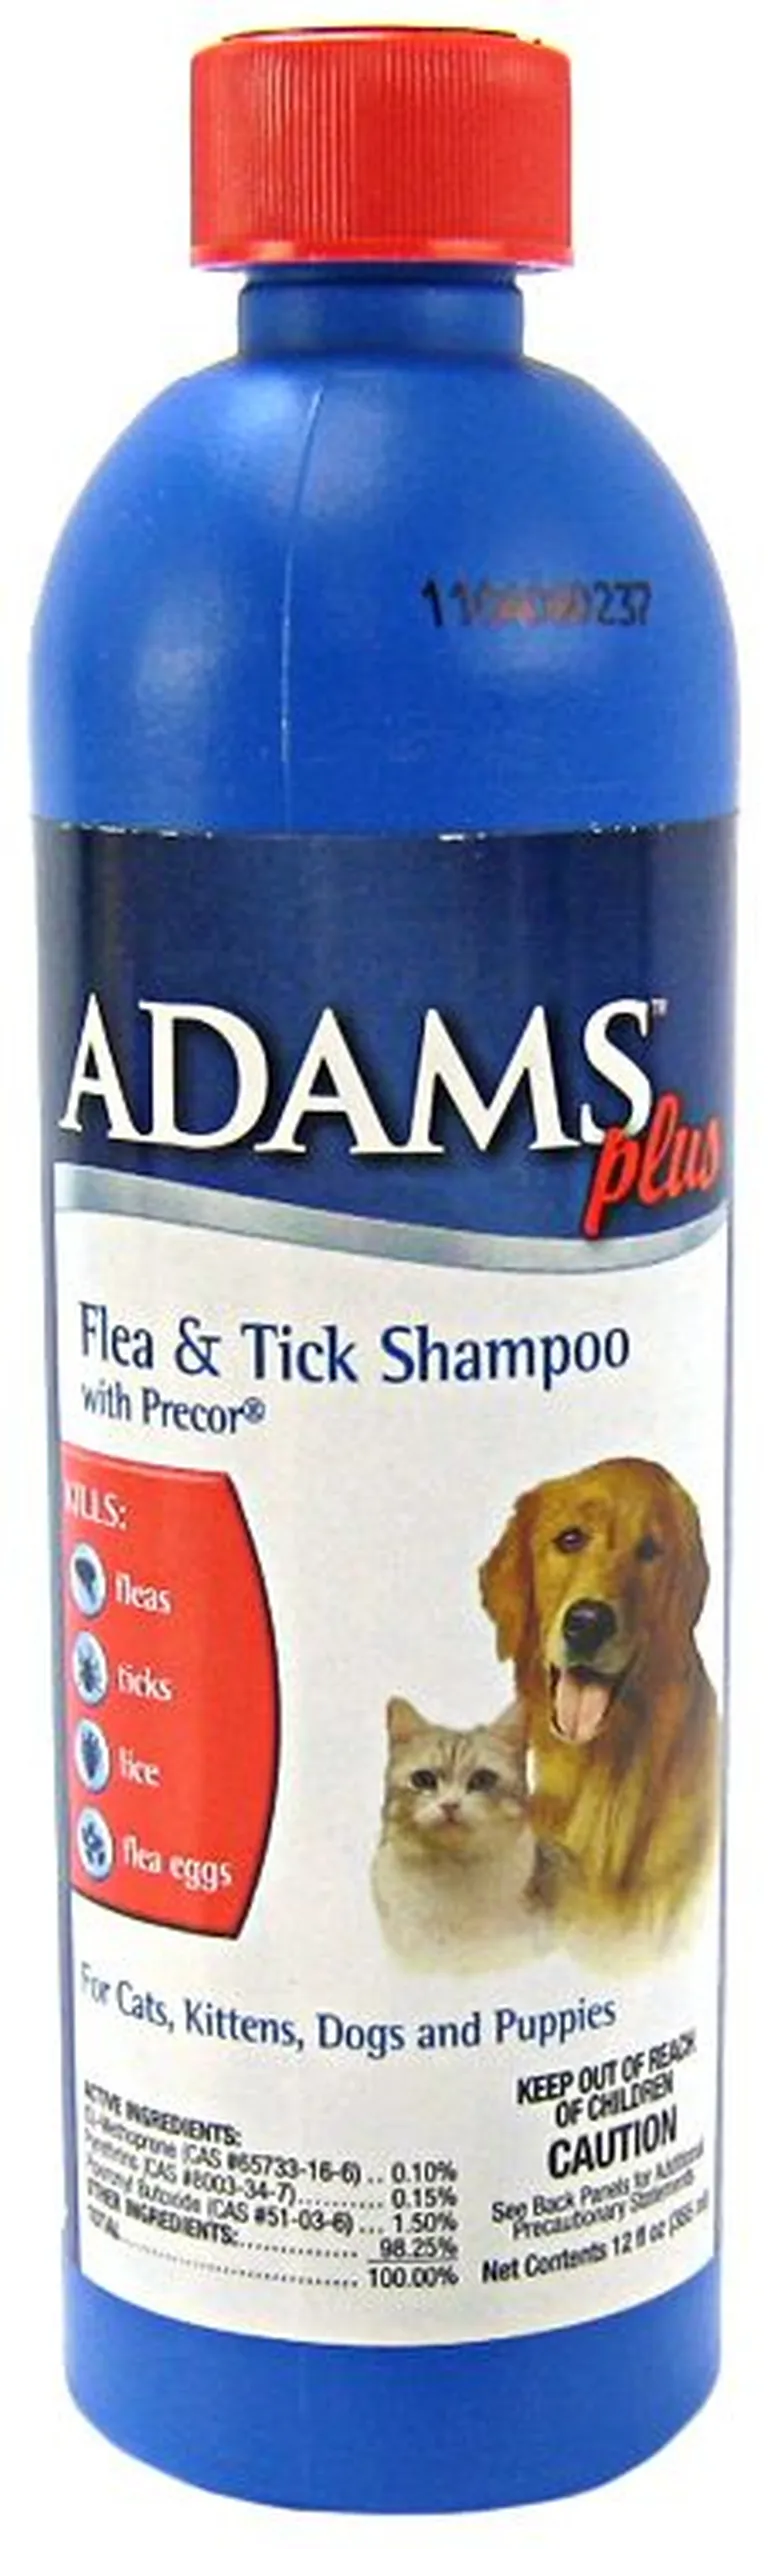 Adams Plus Flea and Tick Shampoo with Precor Photo 1